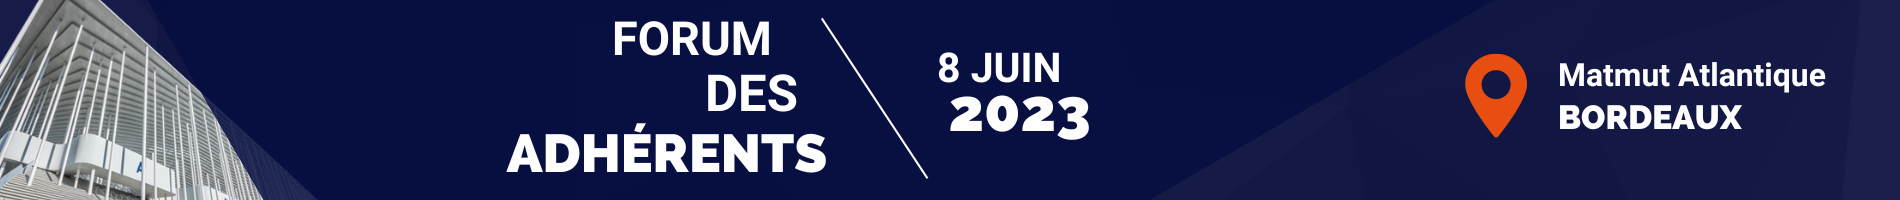 Header evenement ALPHA-RLH Forum des adhérents 2023